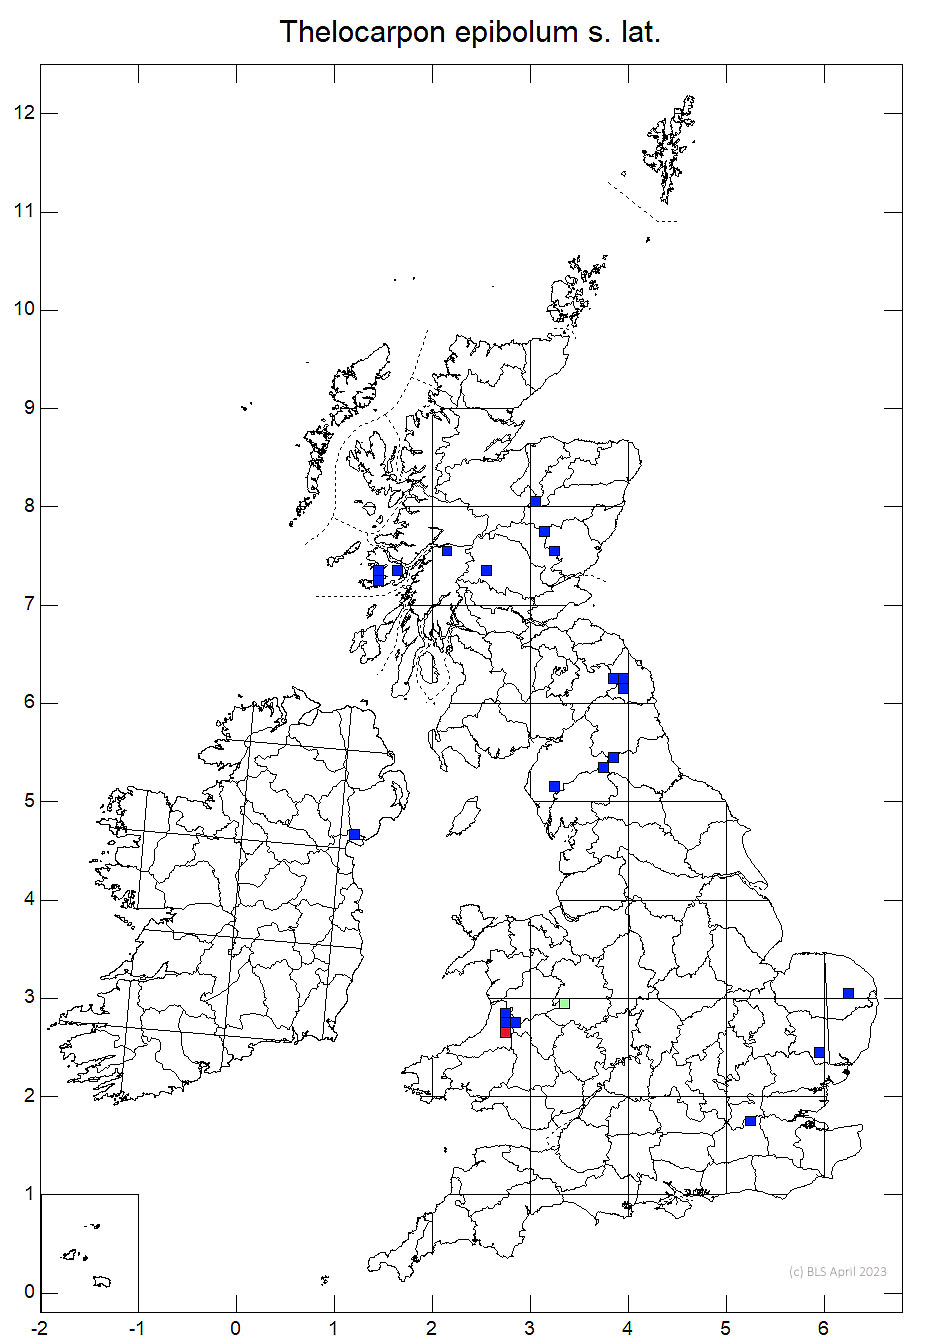 Thelocarpon epibolum s. lat. 10km sq distribution map